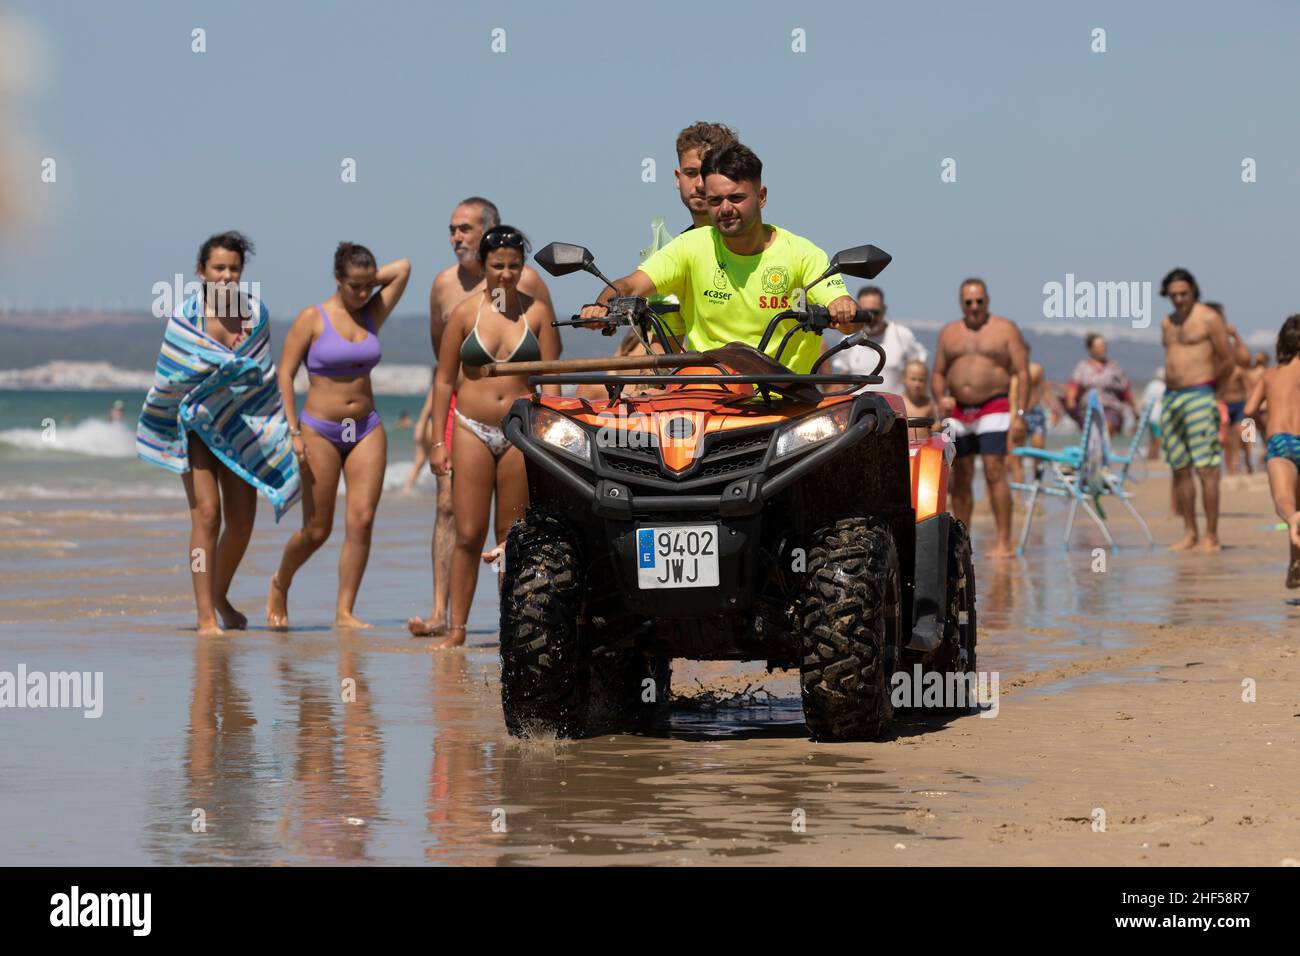 Zahara de los Atunes, Spain - Sept 04, 2021: Two men, lifeguards working for the lifeguard service, ride a quad on the beach, Cadiz province Stock Photo